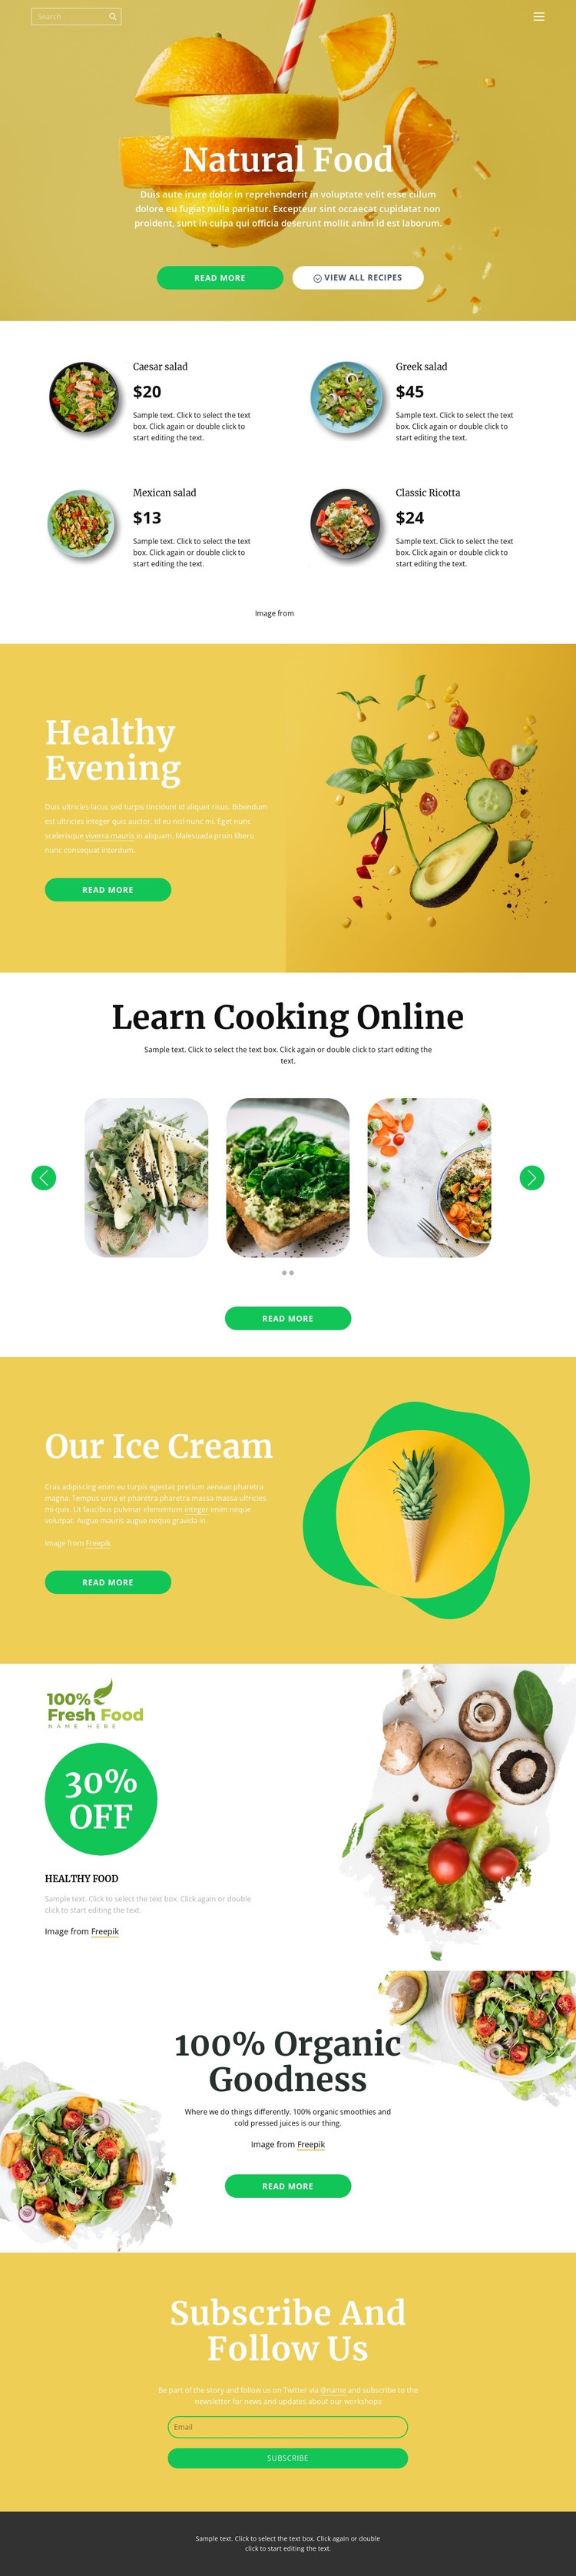 Delicious and healthy food Web Page Design